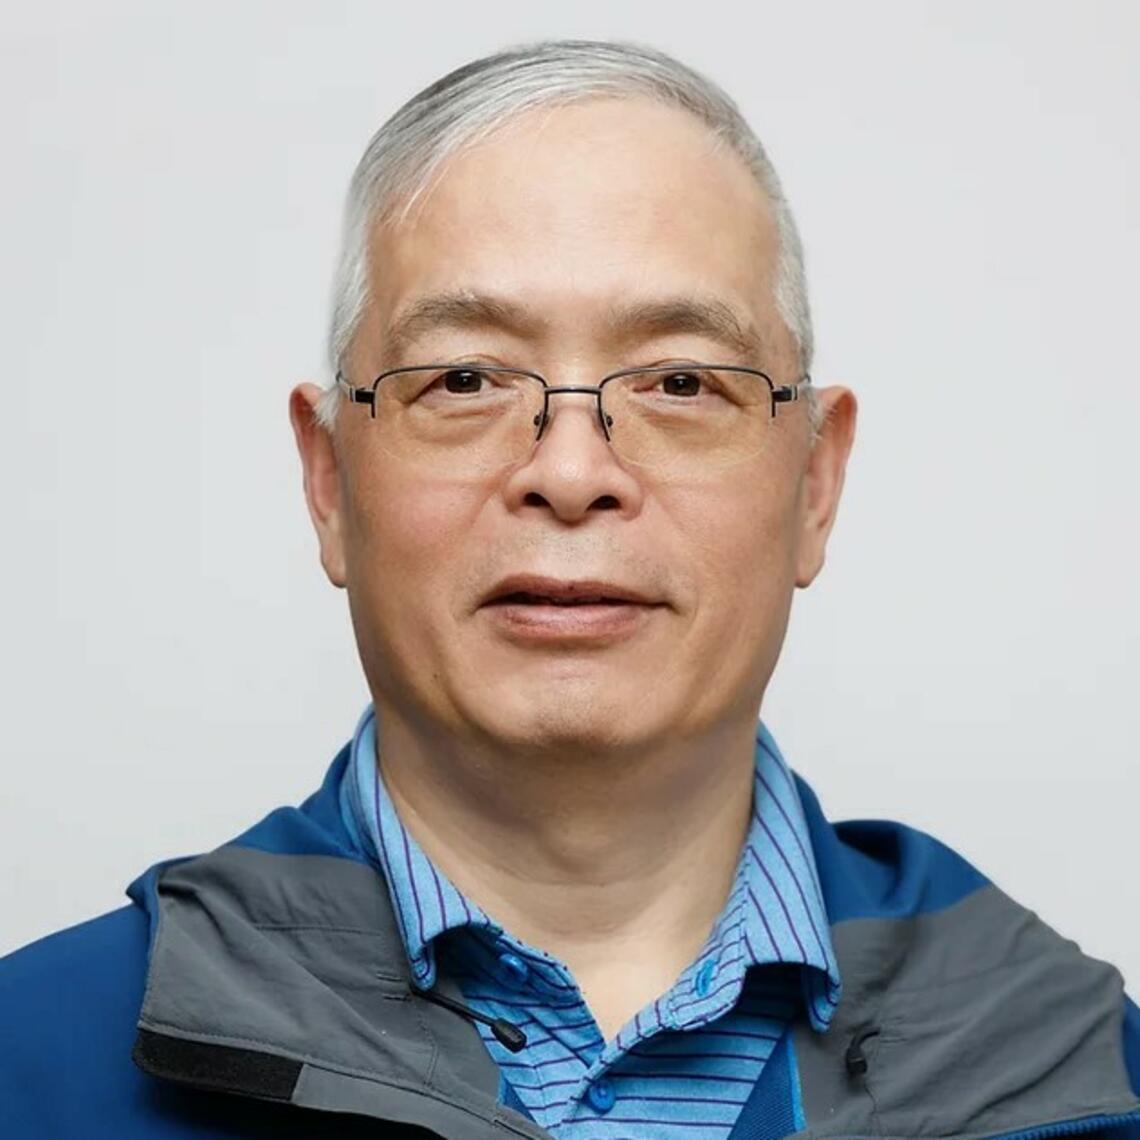 Gary Zhang